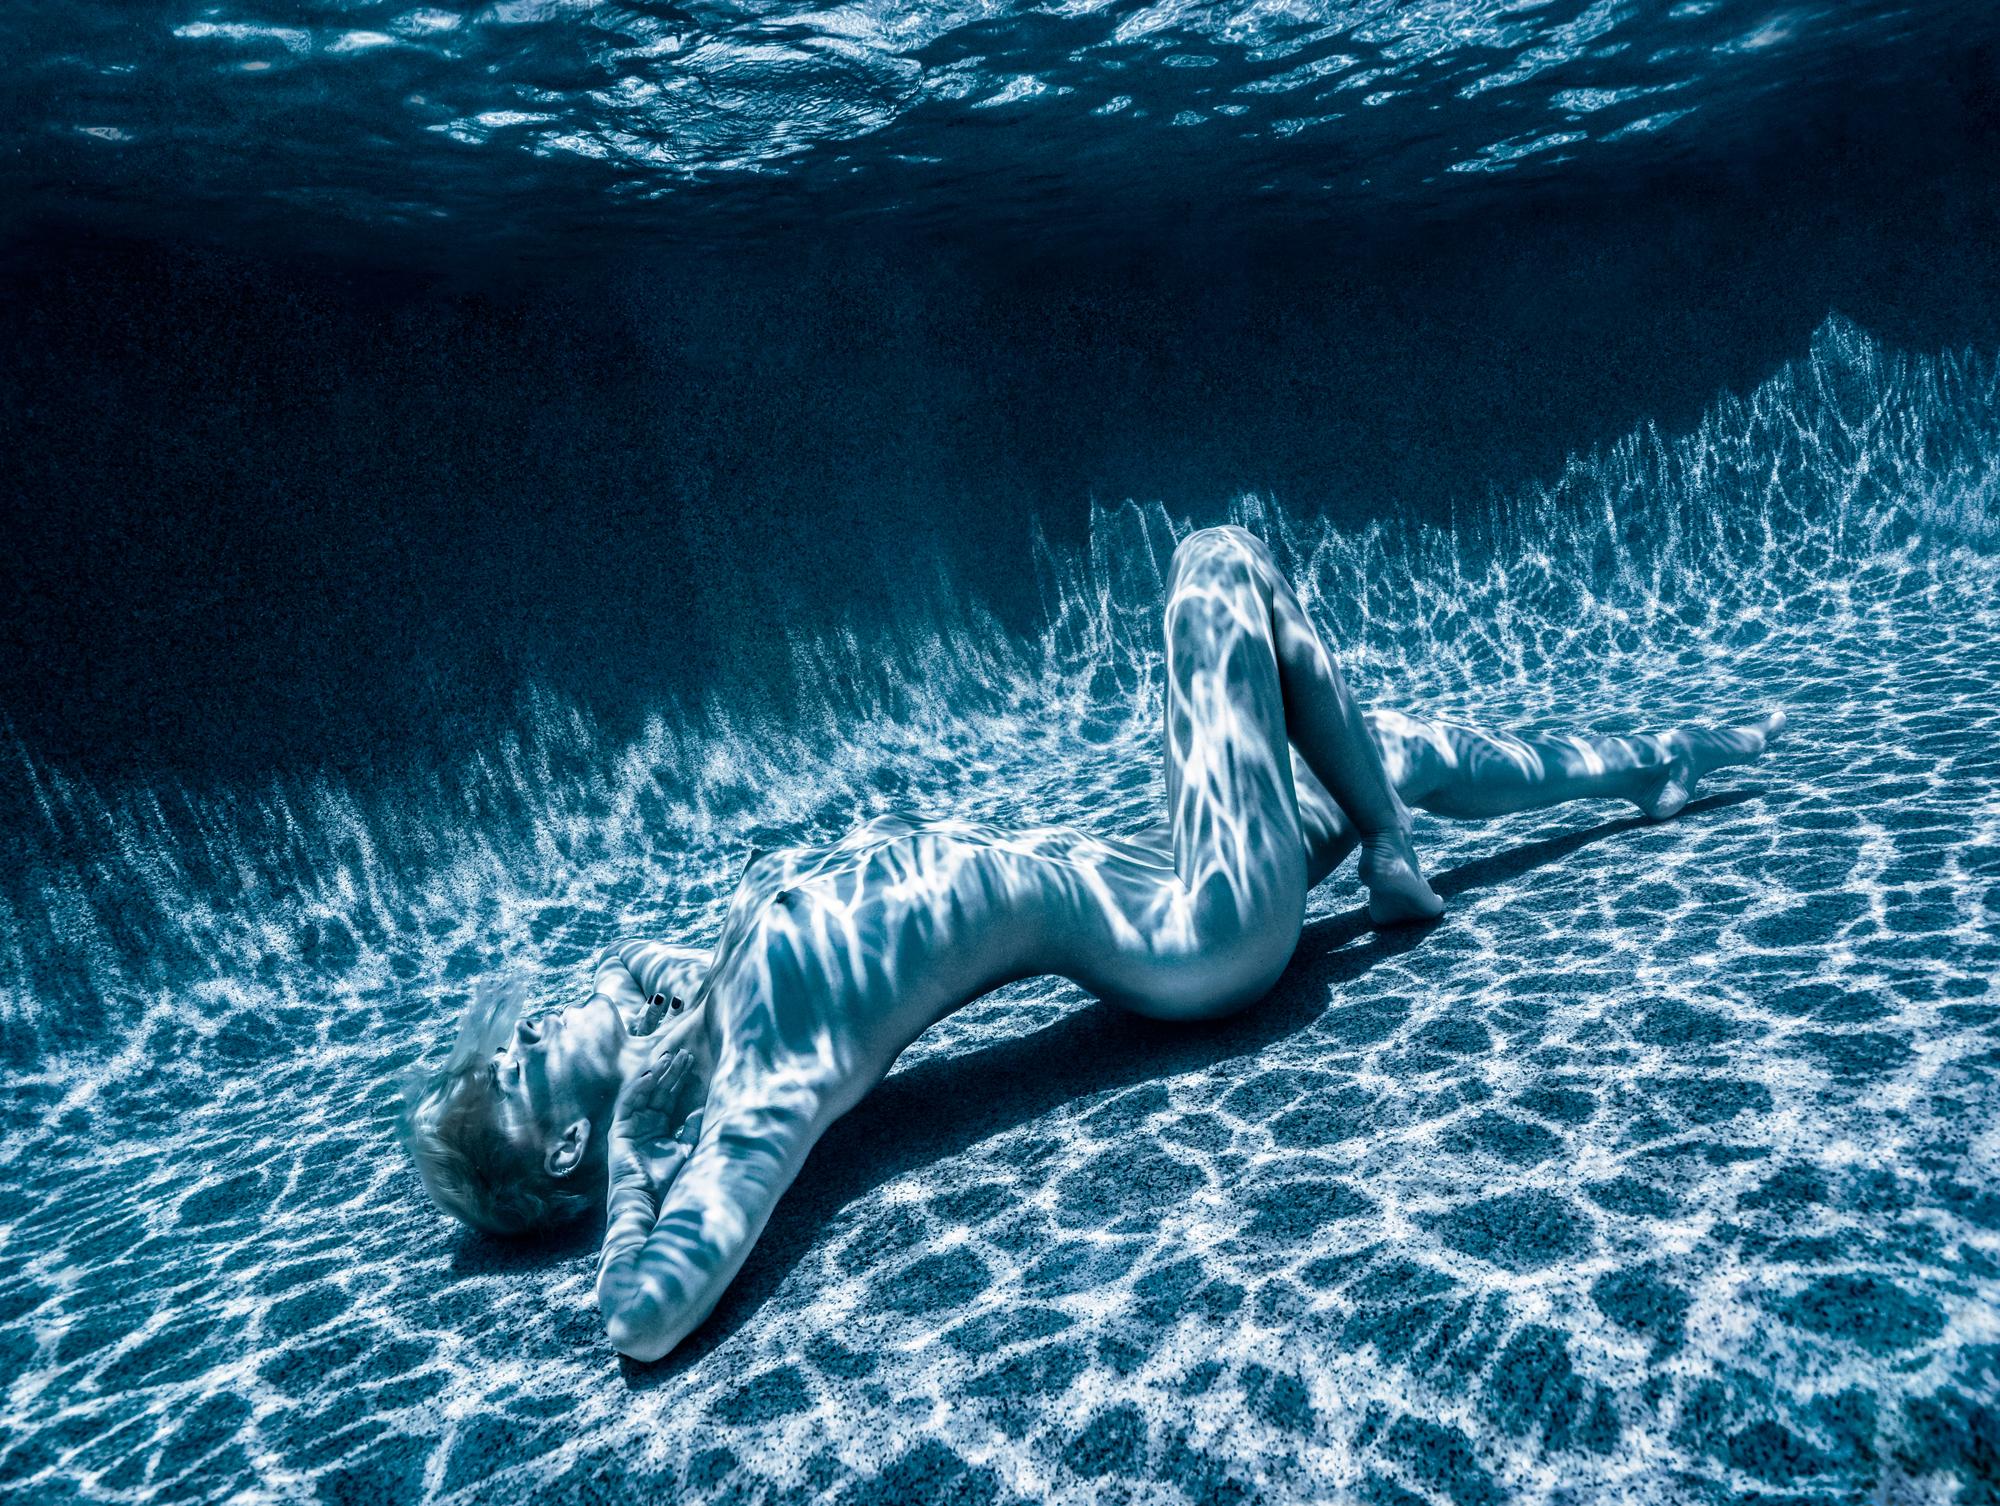 Alex Sher Figurative Photograph - Moonlight - underwater nude photograph - archival pigment print 35x47"